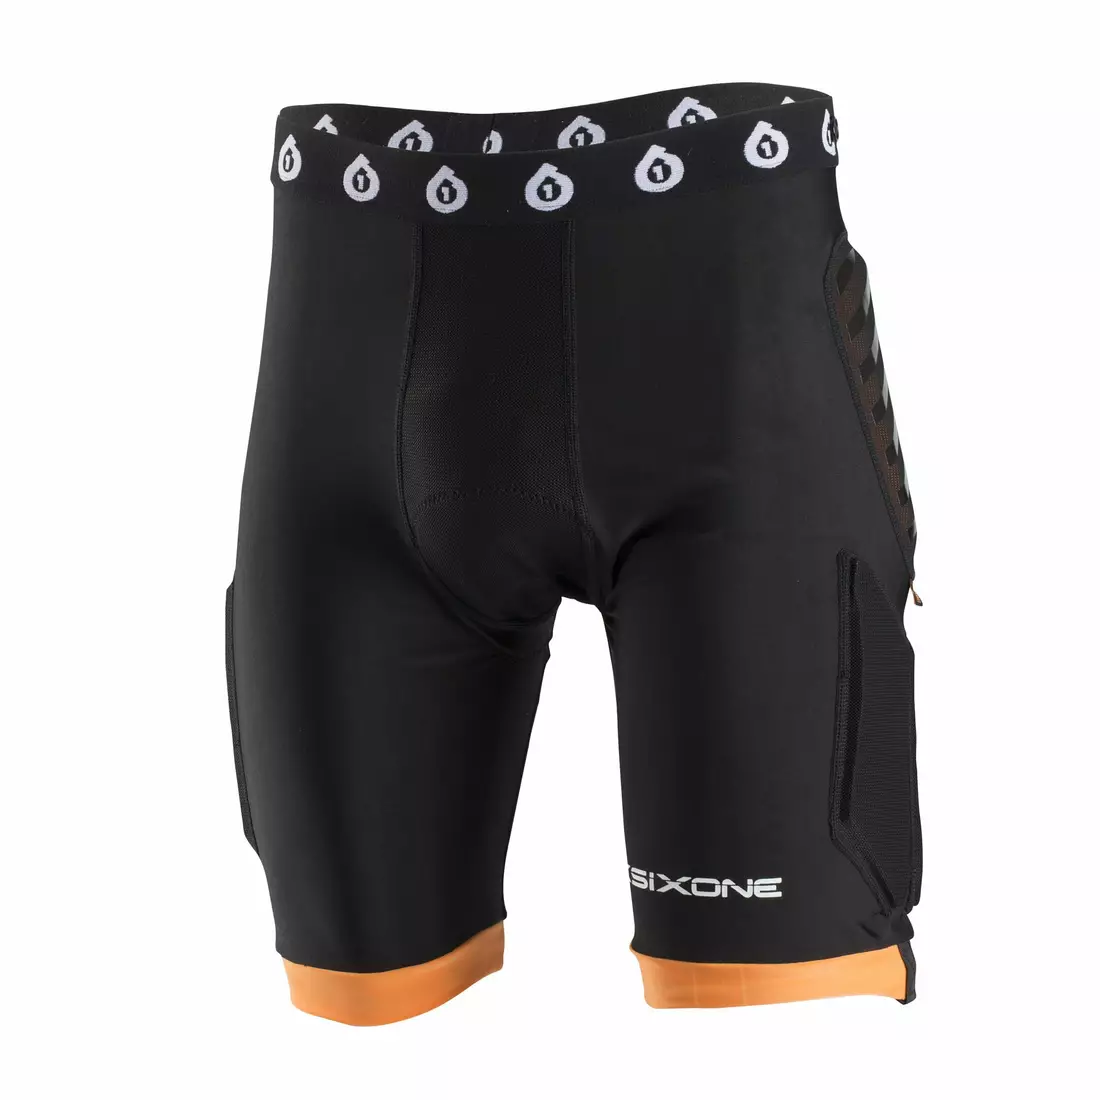 661 cycling shorts EVO COMPRESSION black and orange